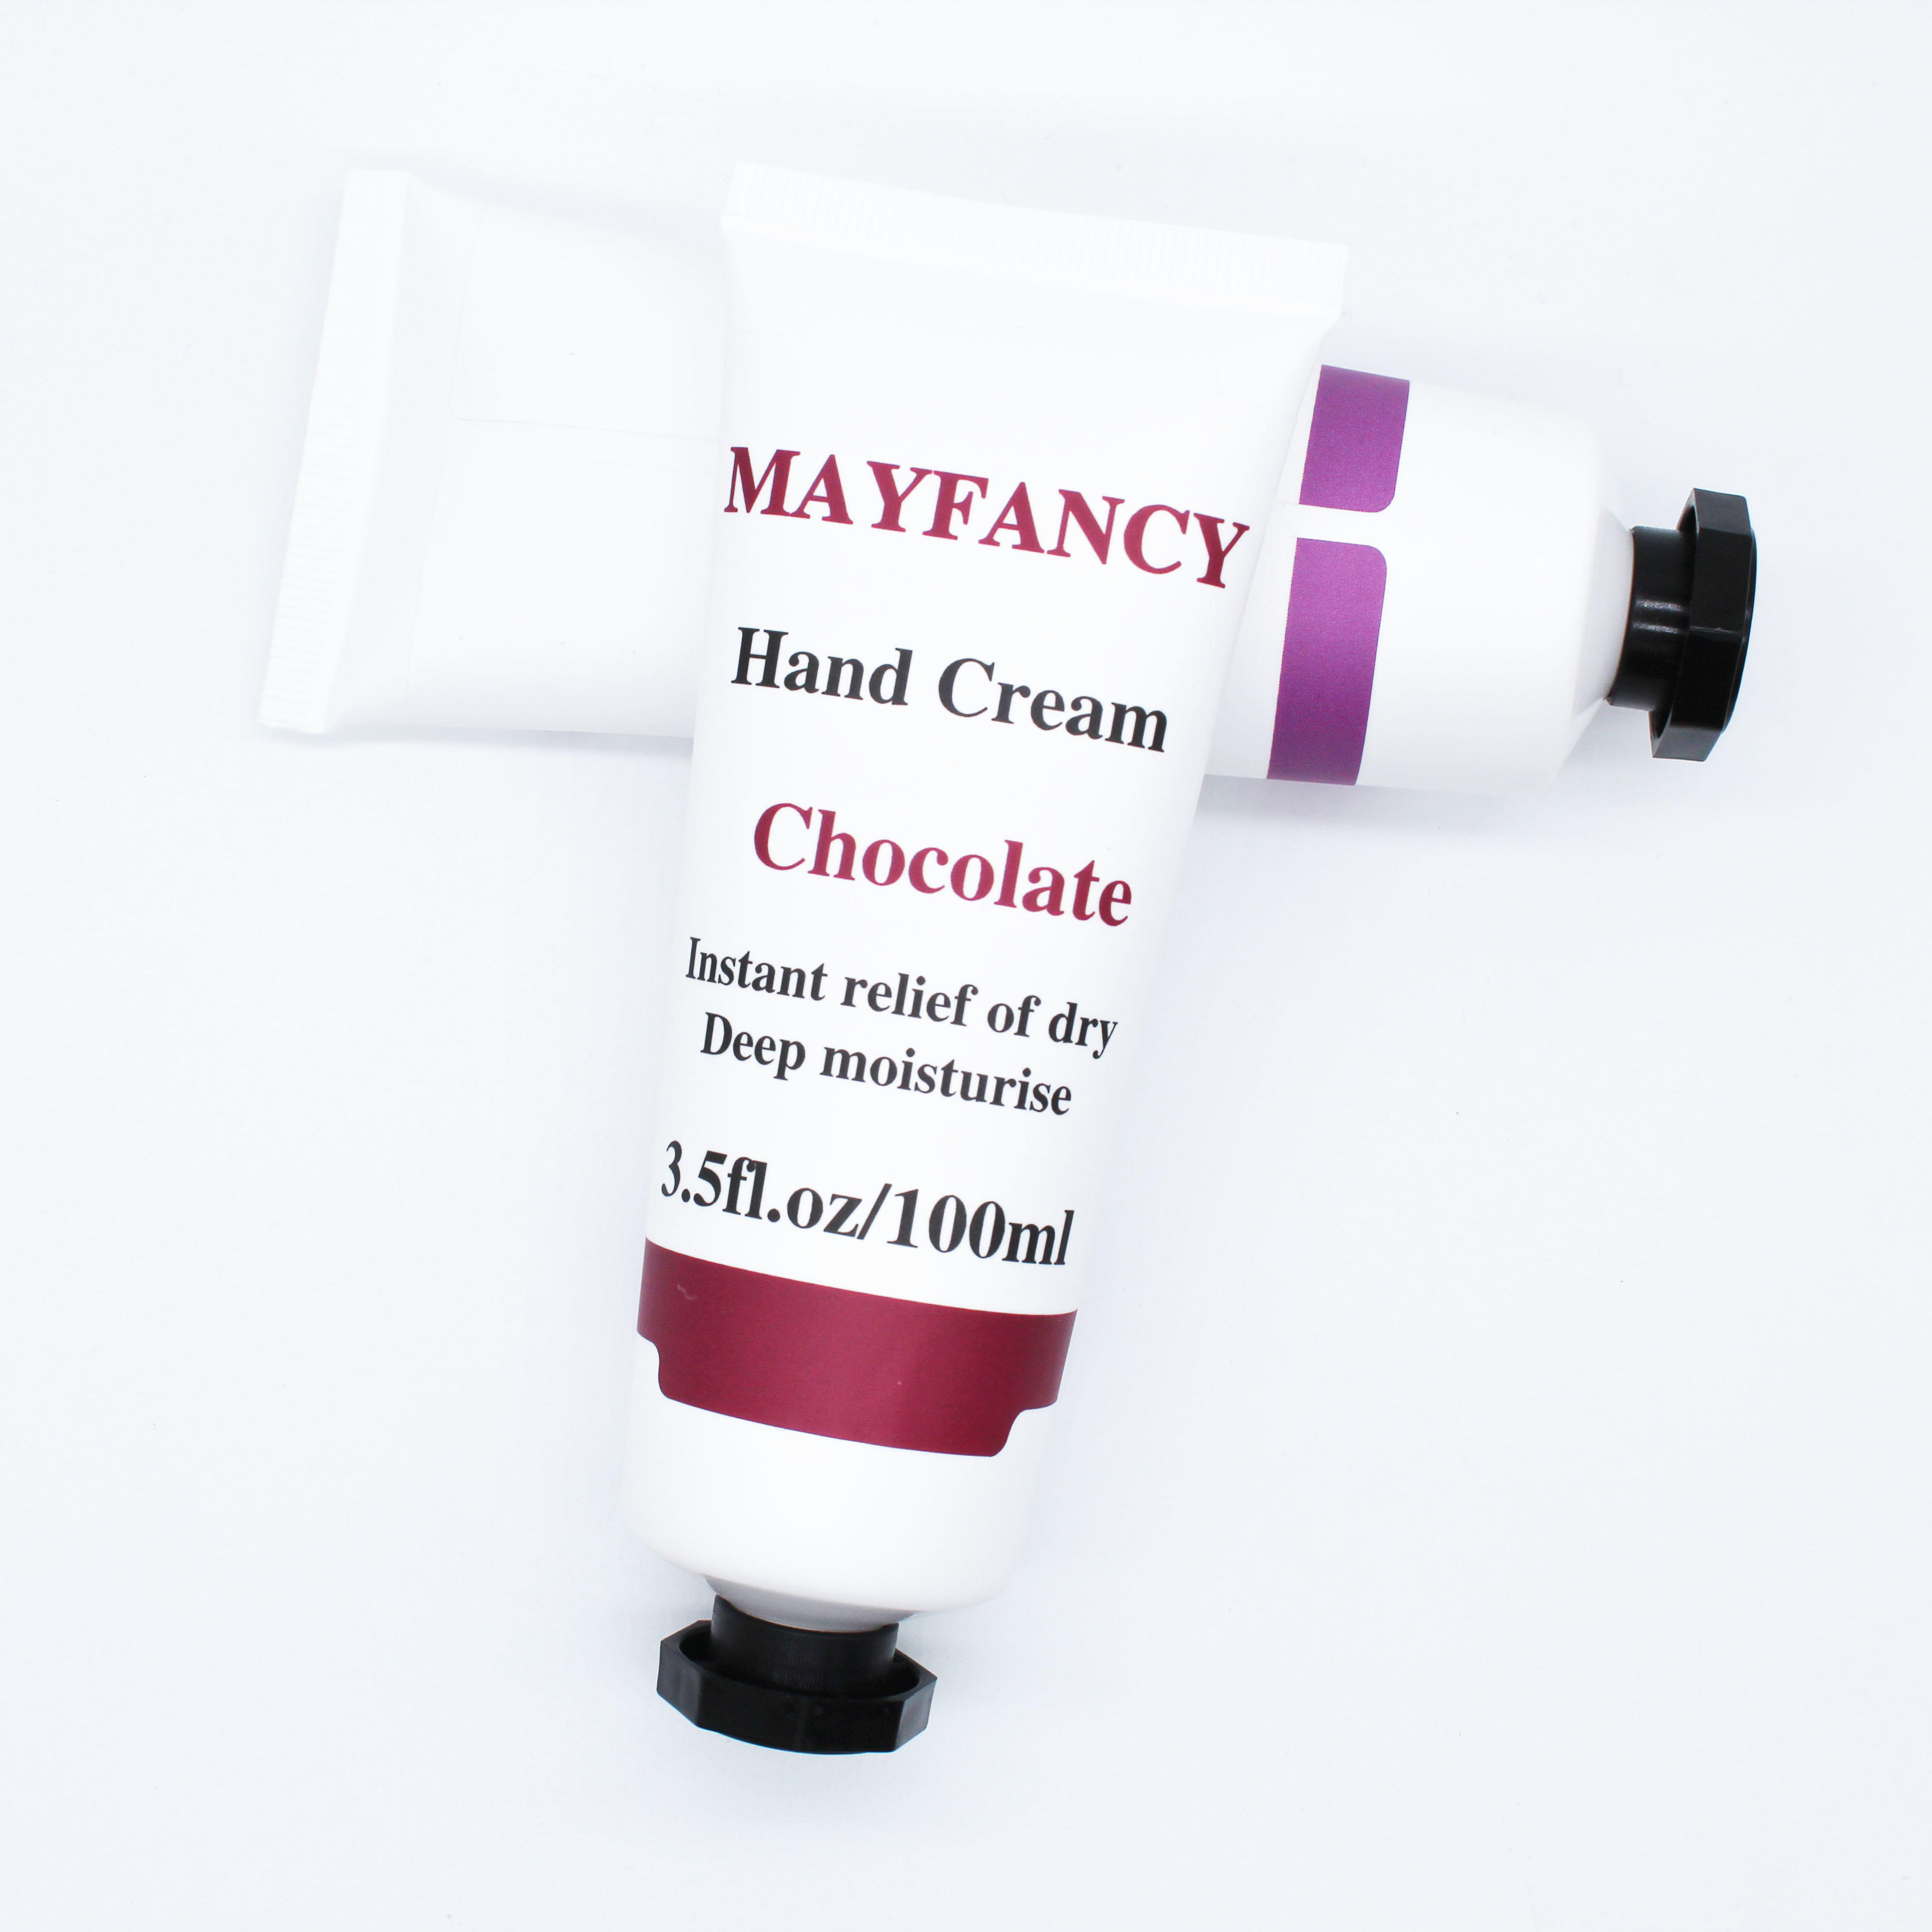 Mayfancy Chocolate Hand Cream